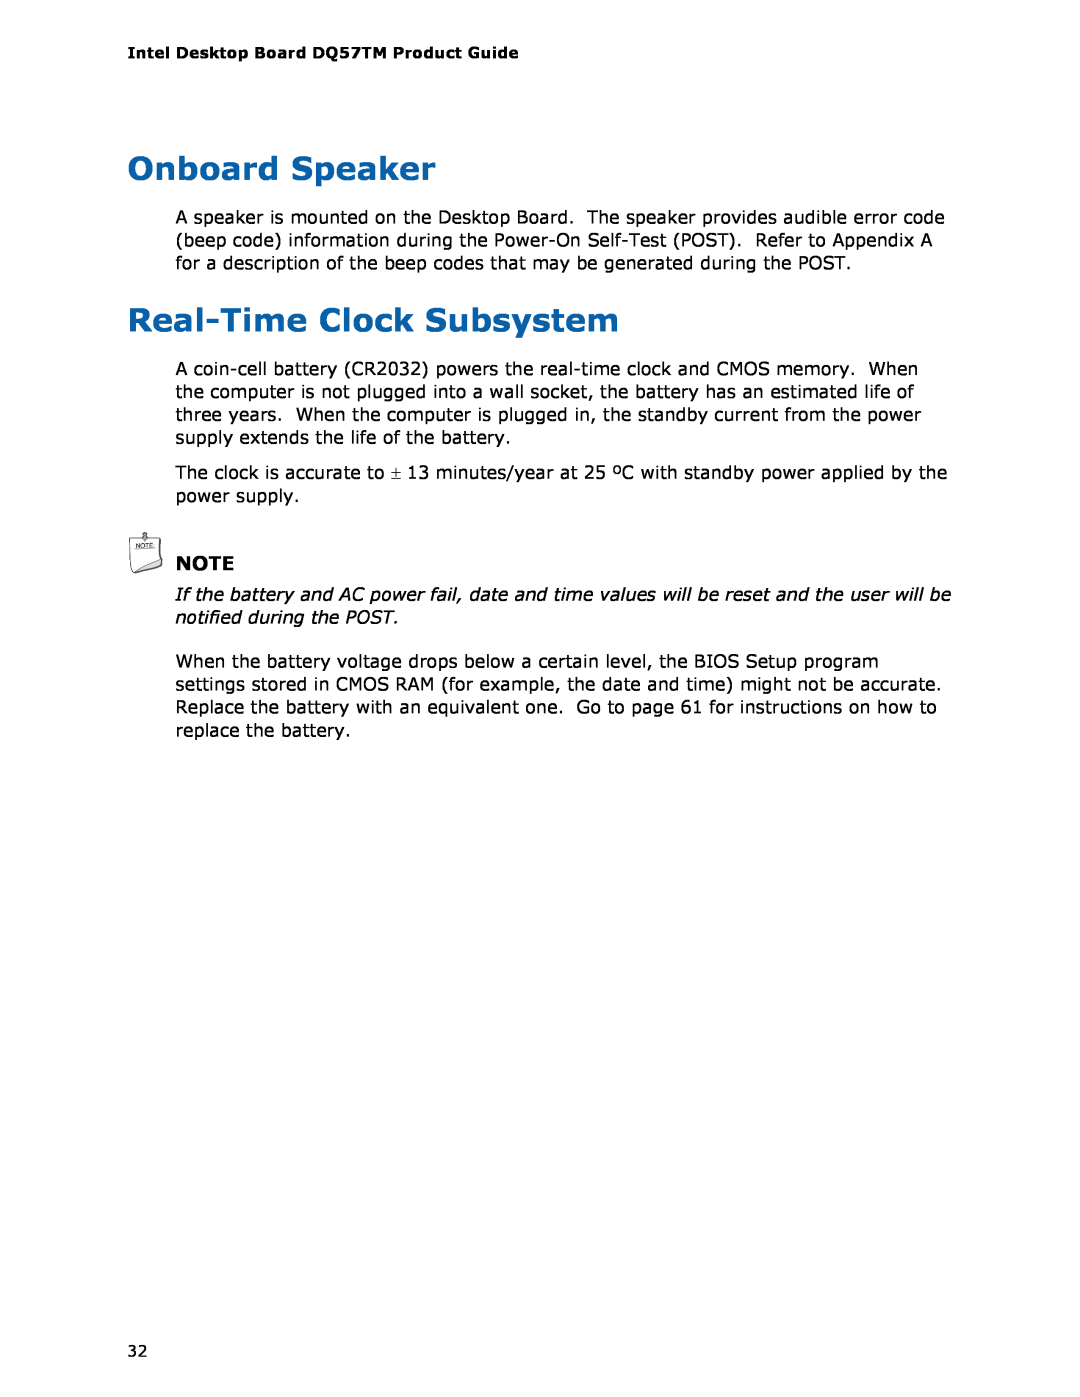 Intel DQ57TM manual Onboard Speaker, Real-TimeClock Subsystem 